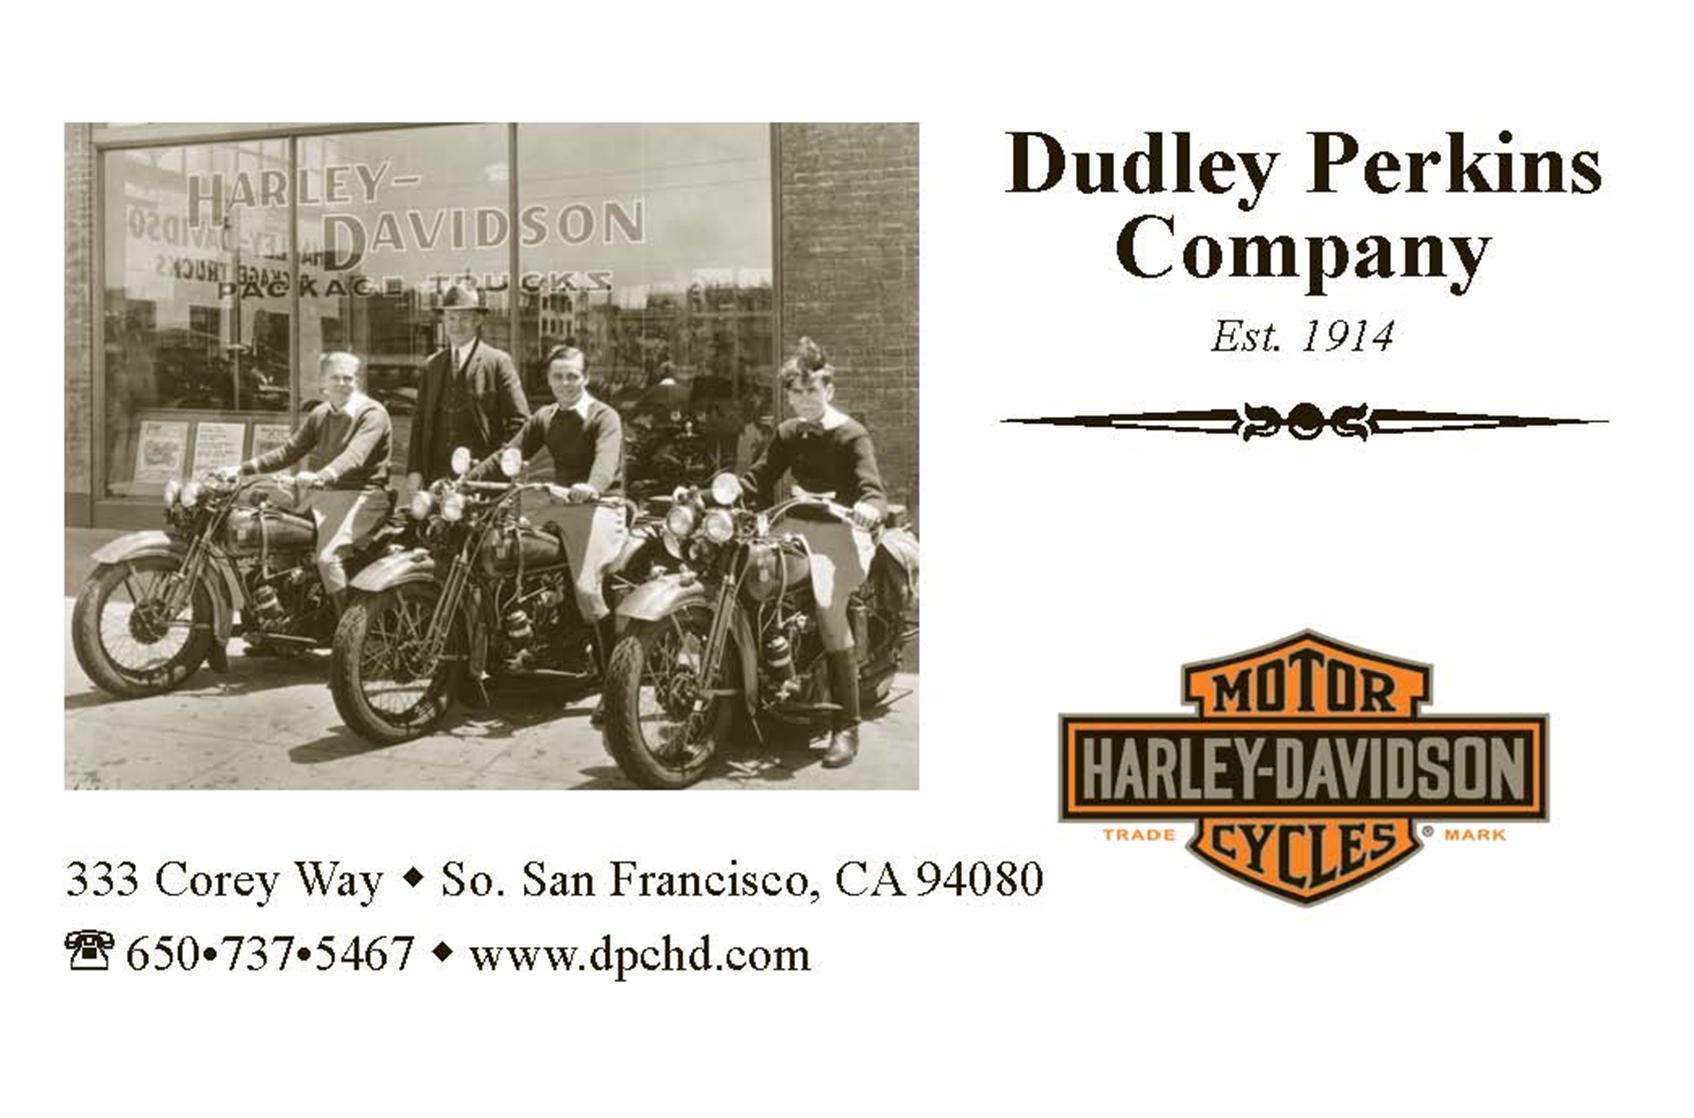 Dudley Perkins Harley-Davidson, Souath San Francisco, CA